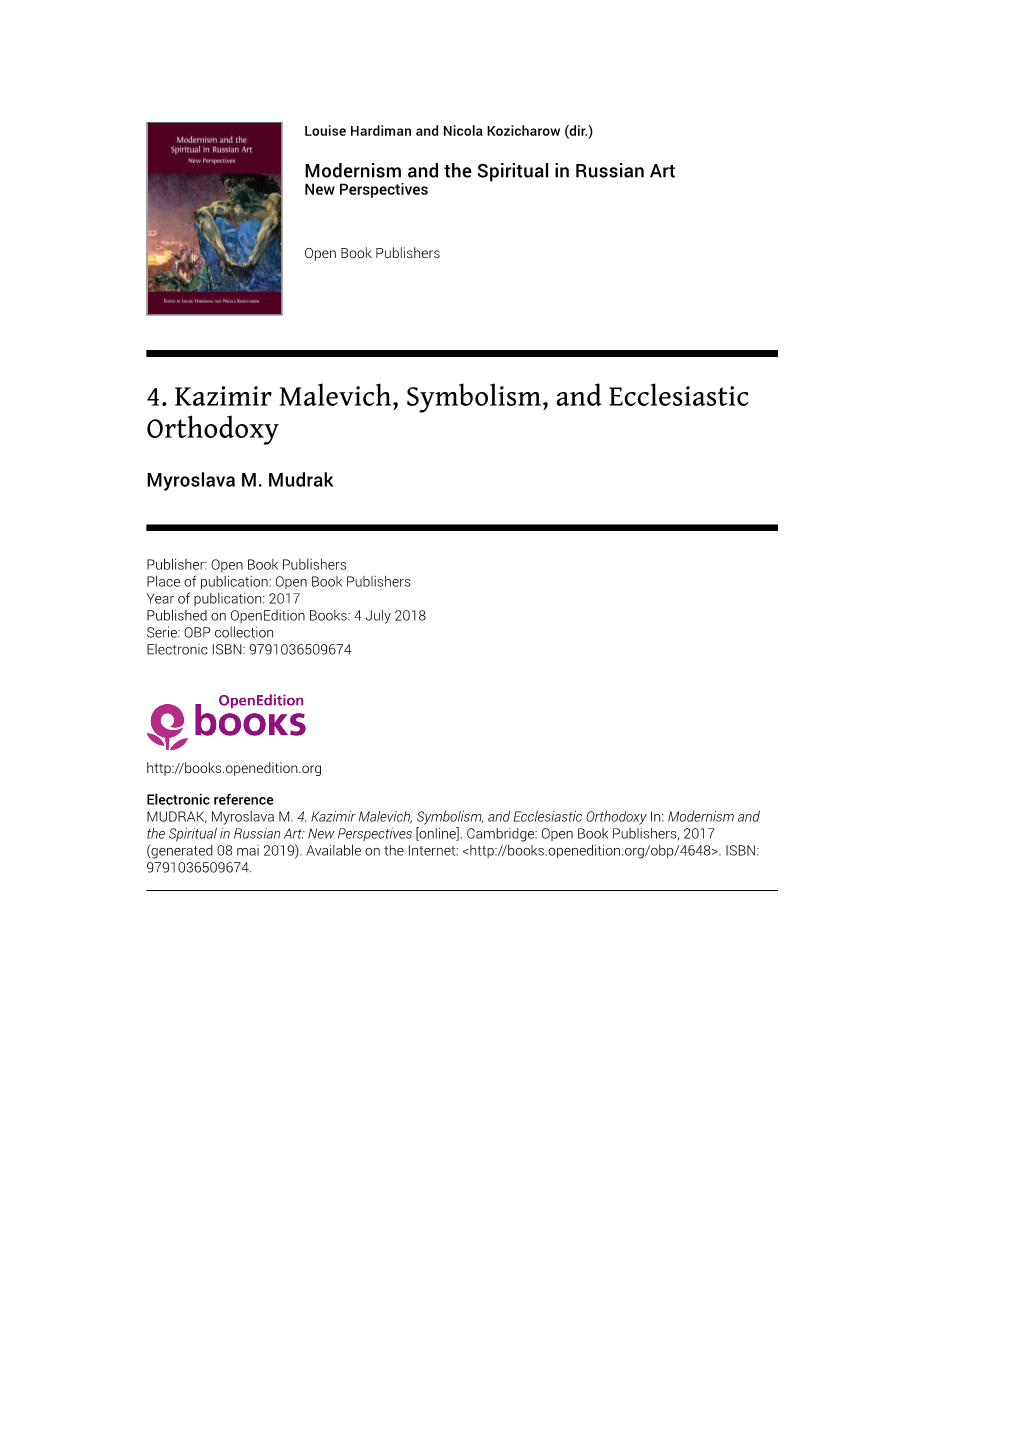 4. Kazimir Malevich, Symbolism, and Ecclesiastic Orthodoxy